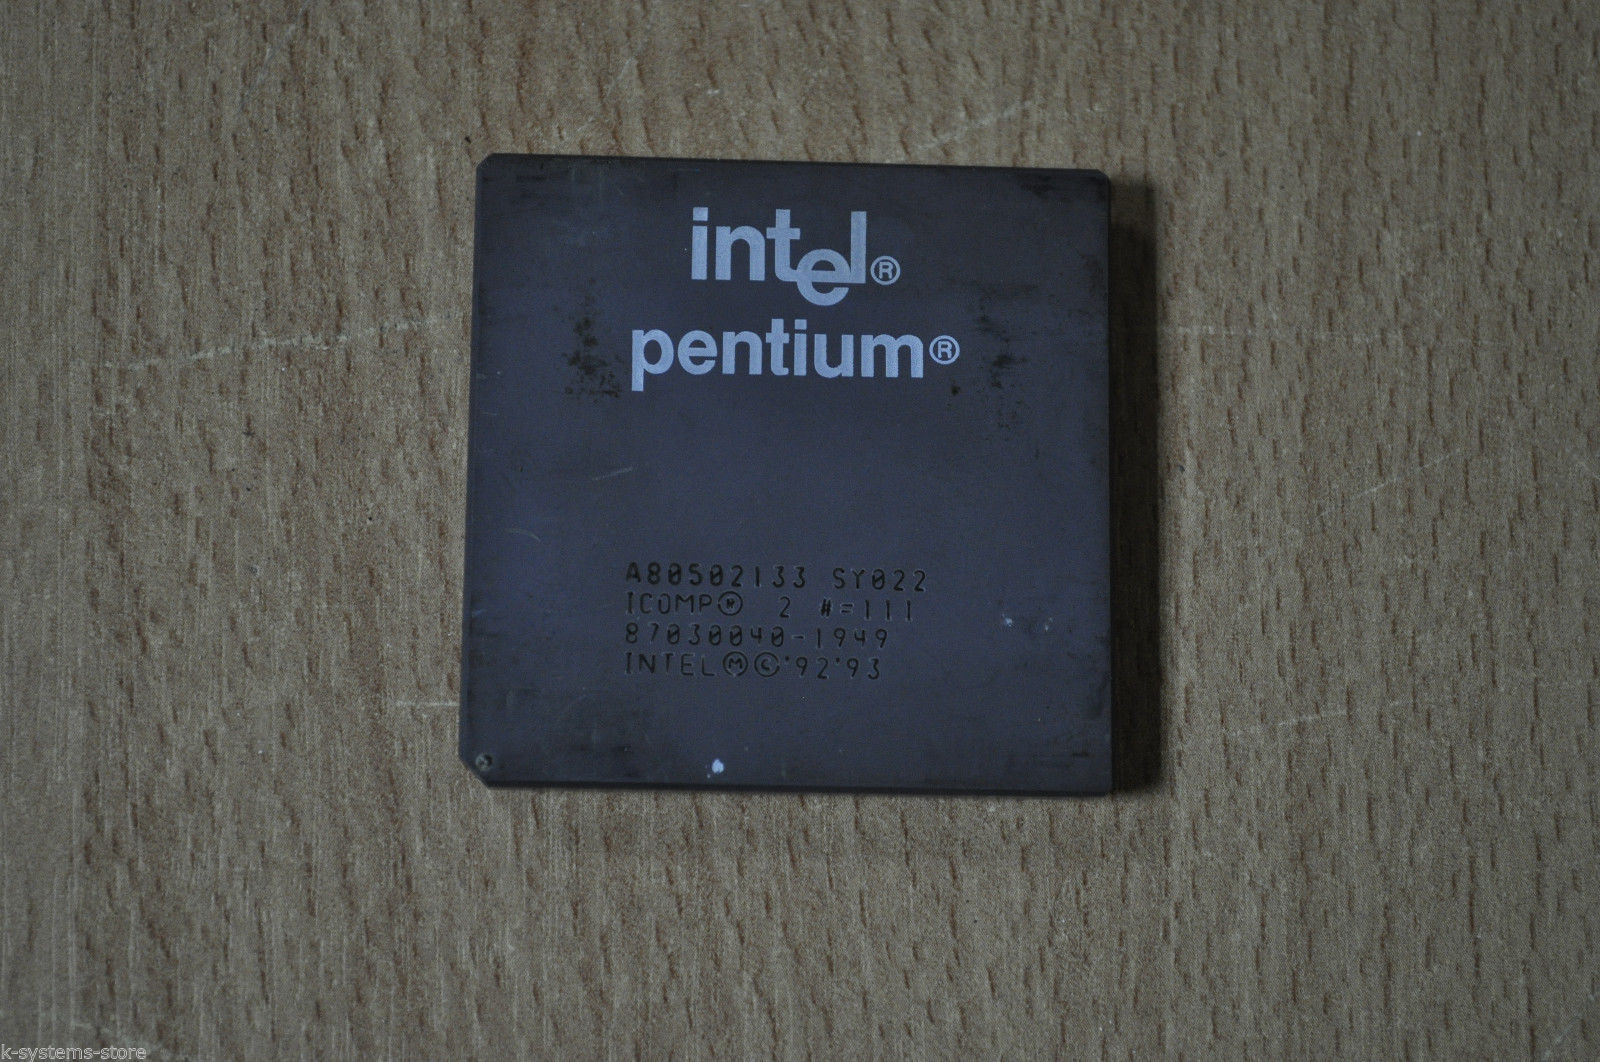 intel Pentium A80502133 SY022 87030040-1949 INTEL \'92\'93 SY022/SSS 16460220BC